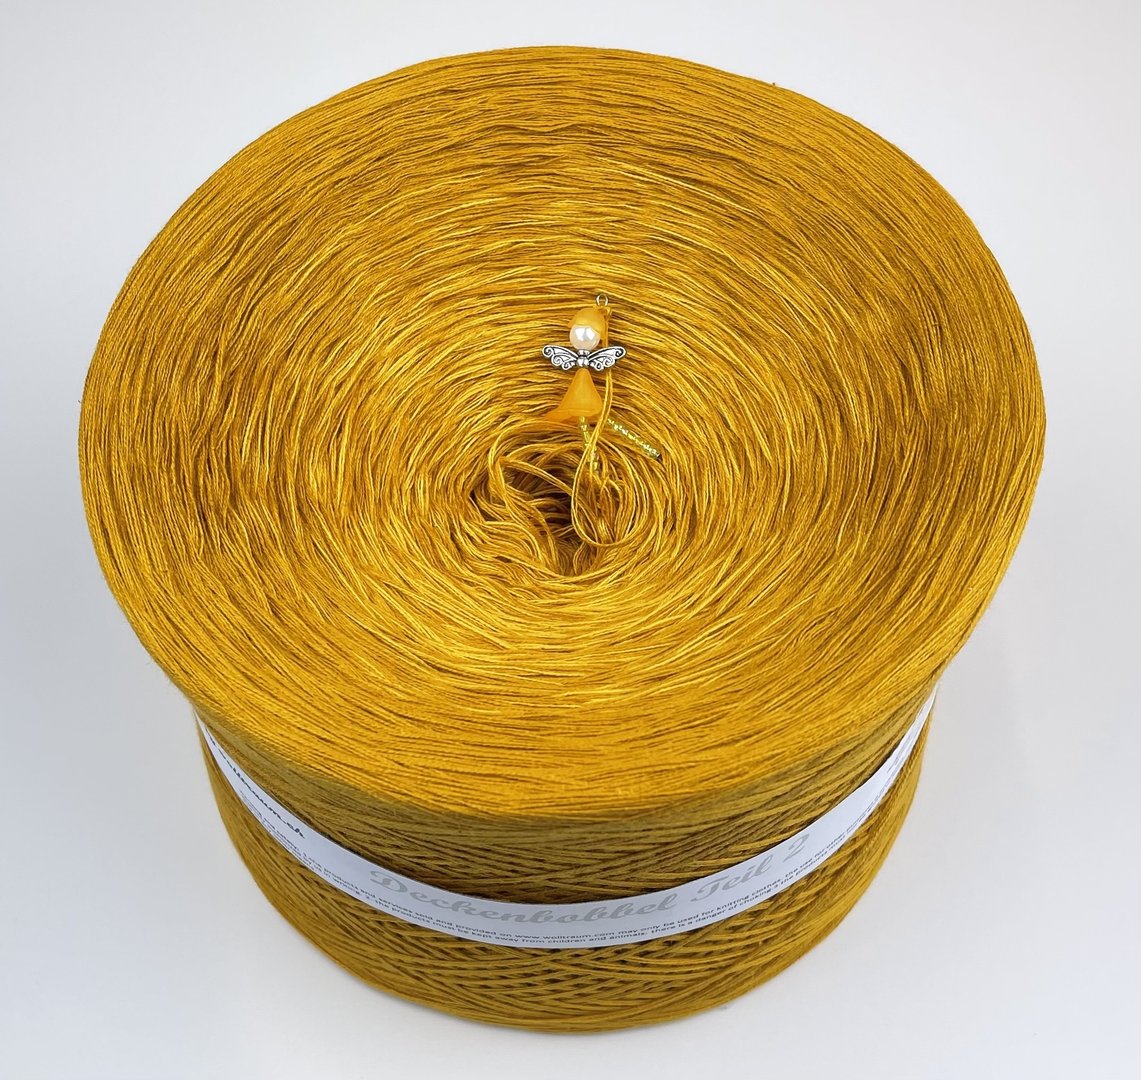 A large Wolltraum yarn cake in a deep yellow.